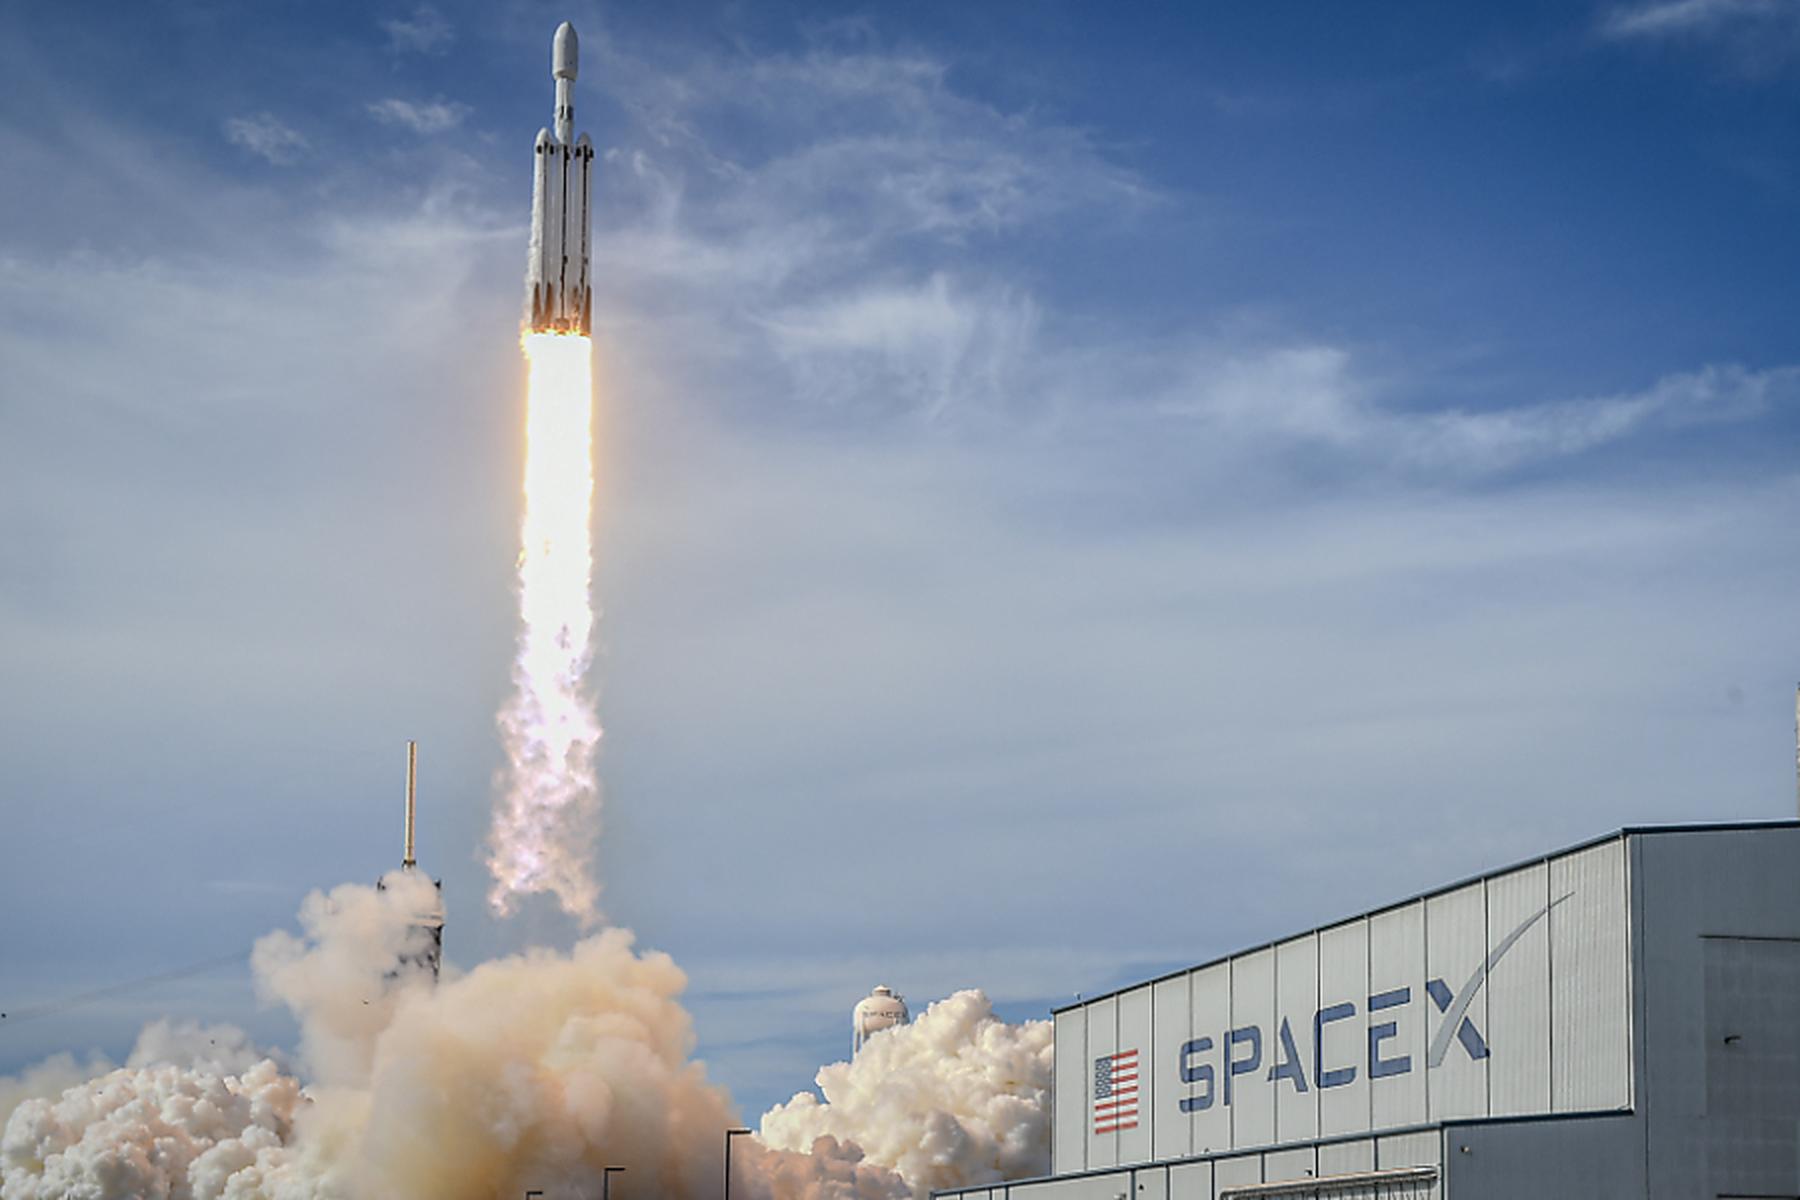 Washington: US-Luftfahrtbehörde stoppt Starts von SpaceX-Raketen